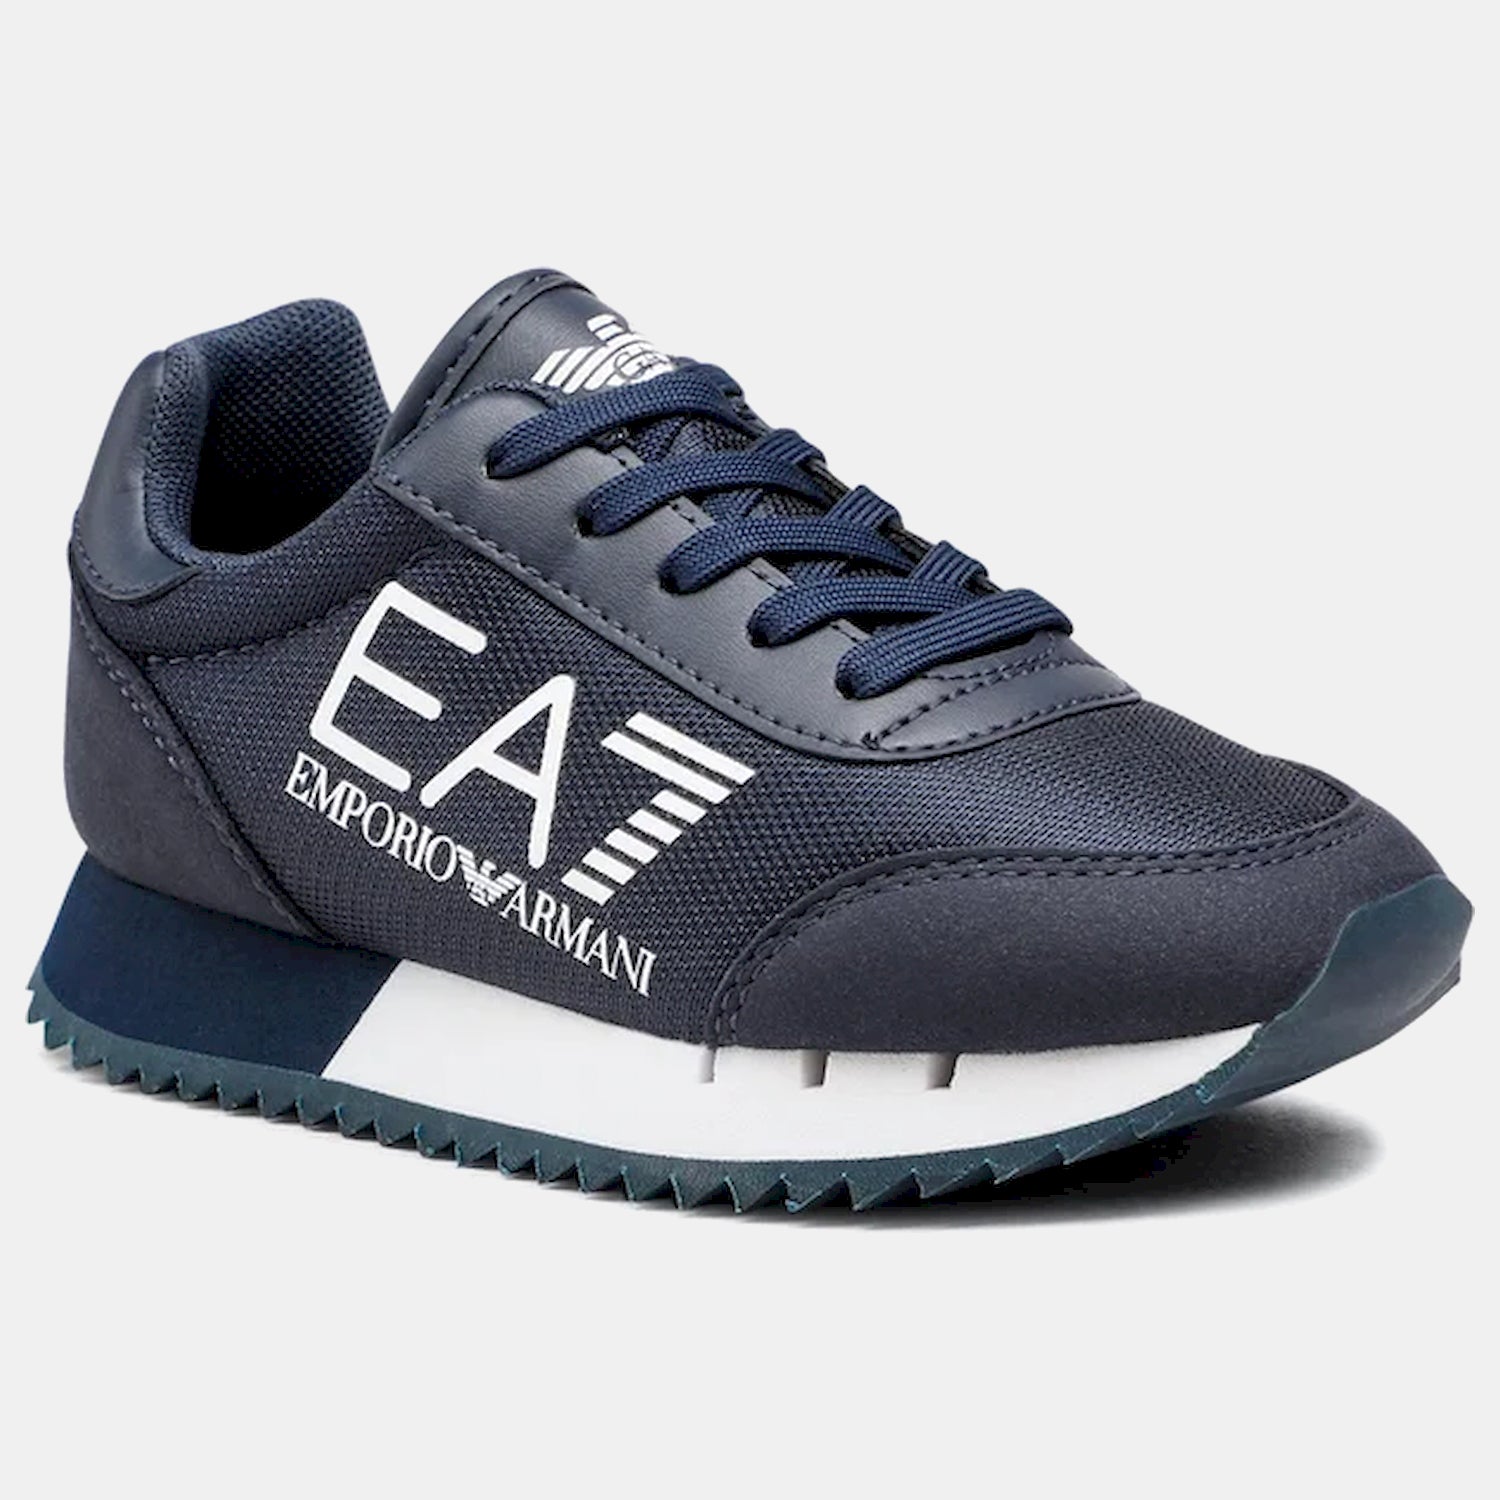 Emporio Armani Ea7 Sapatilhas Sneakers Shoes Xsx107 Xot56 Navy White Navy Branco_shot2